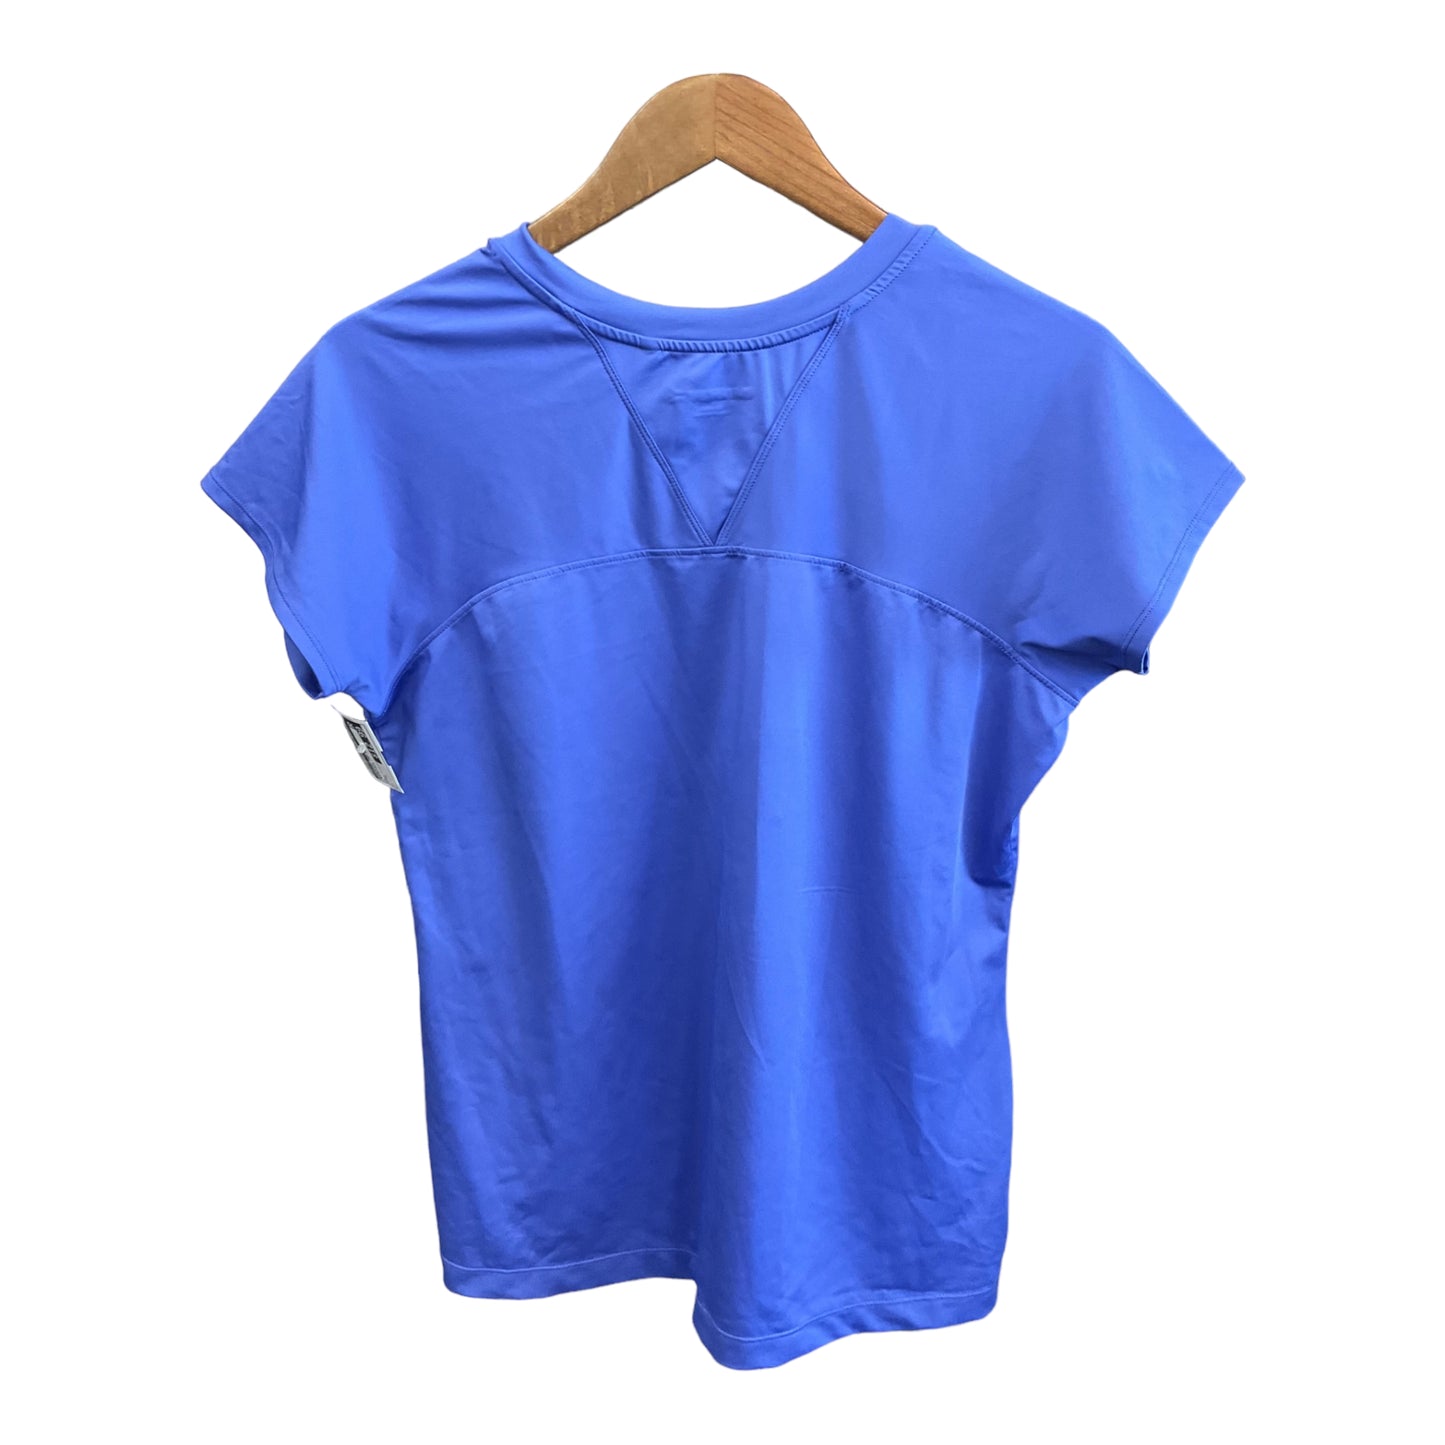 Athletic Top Short Sleeve By Danskin  Size: L